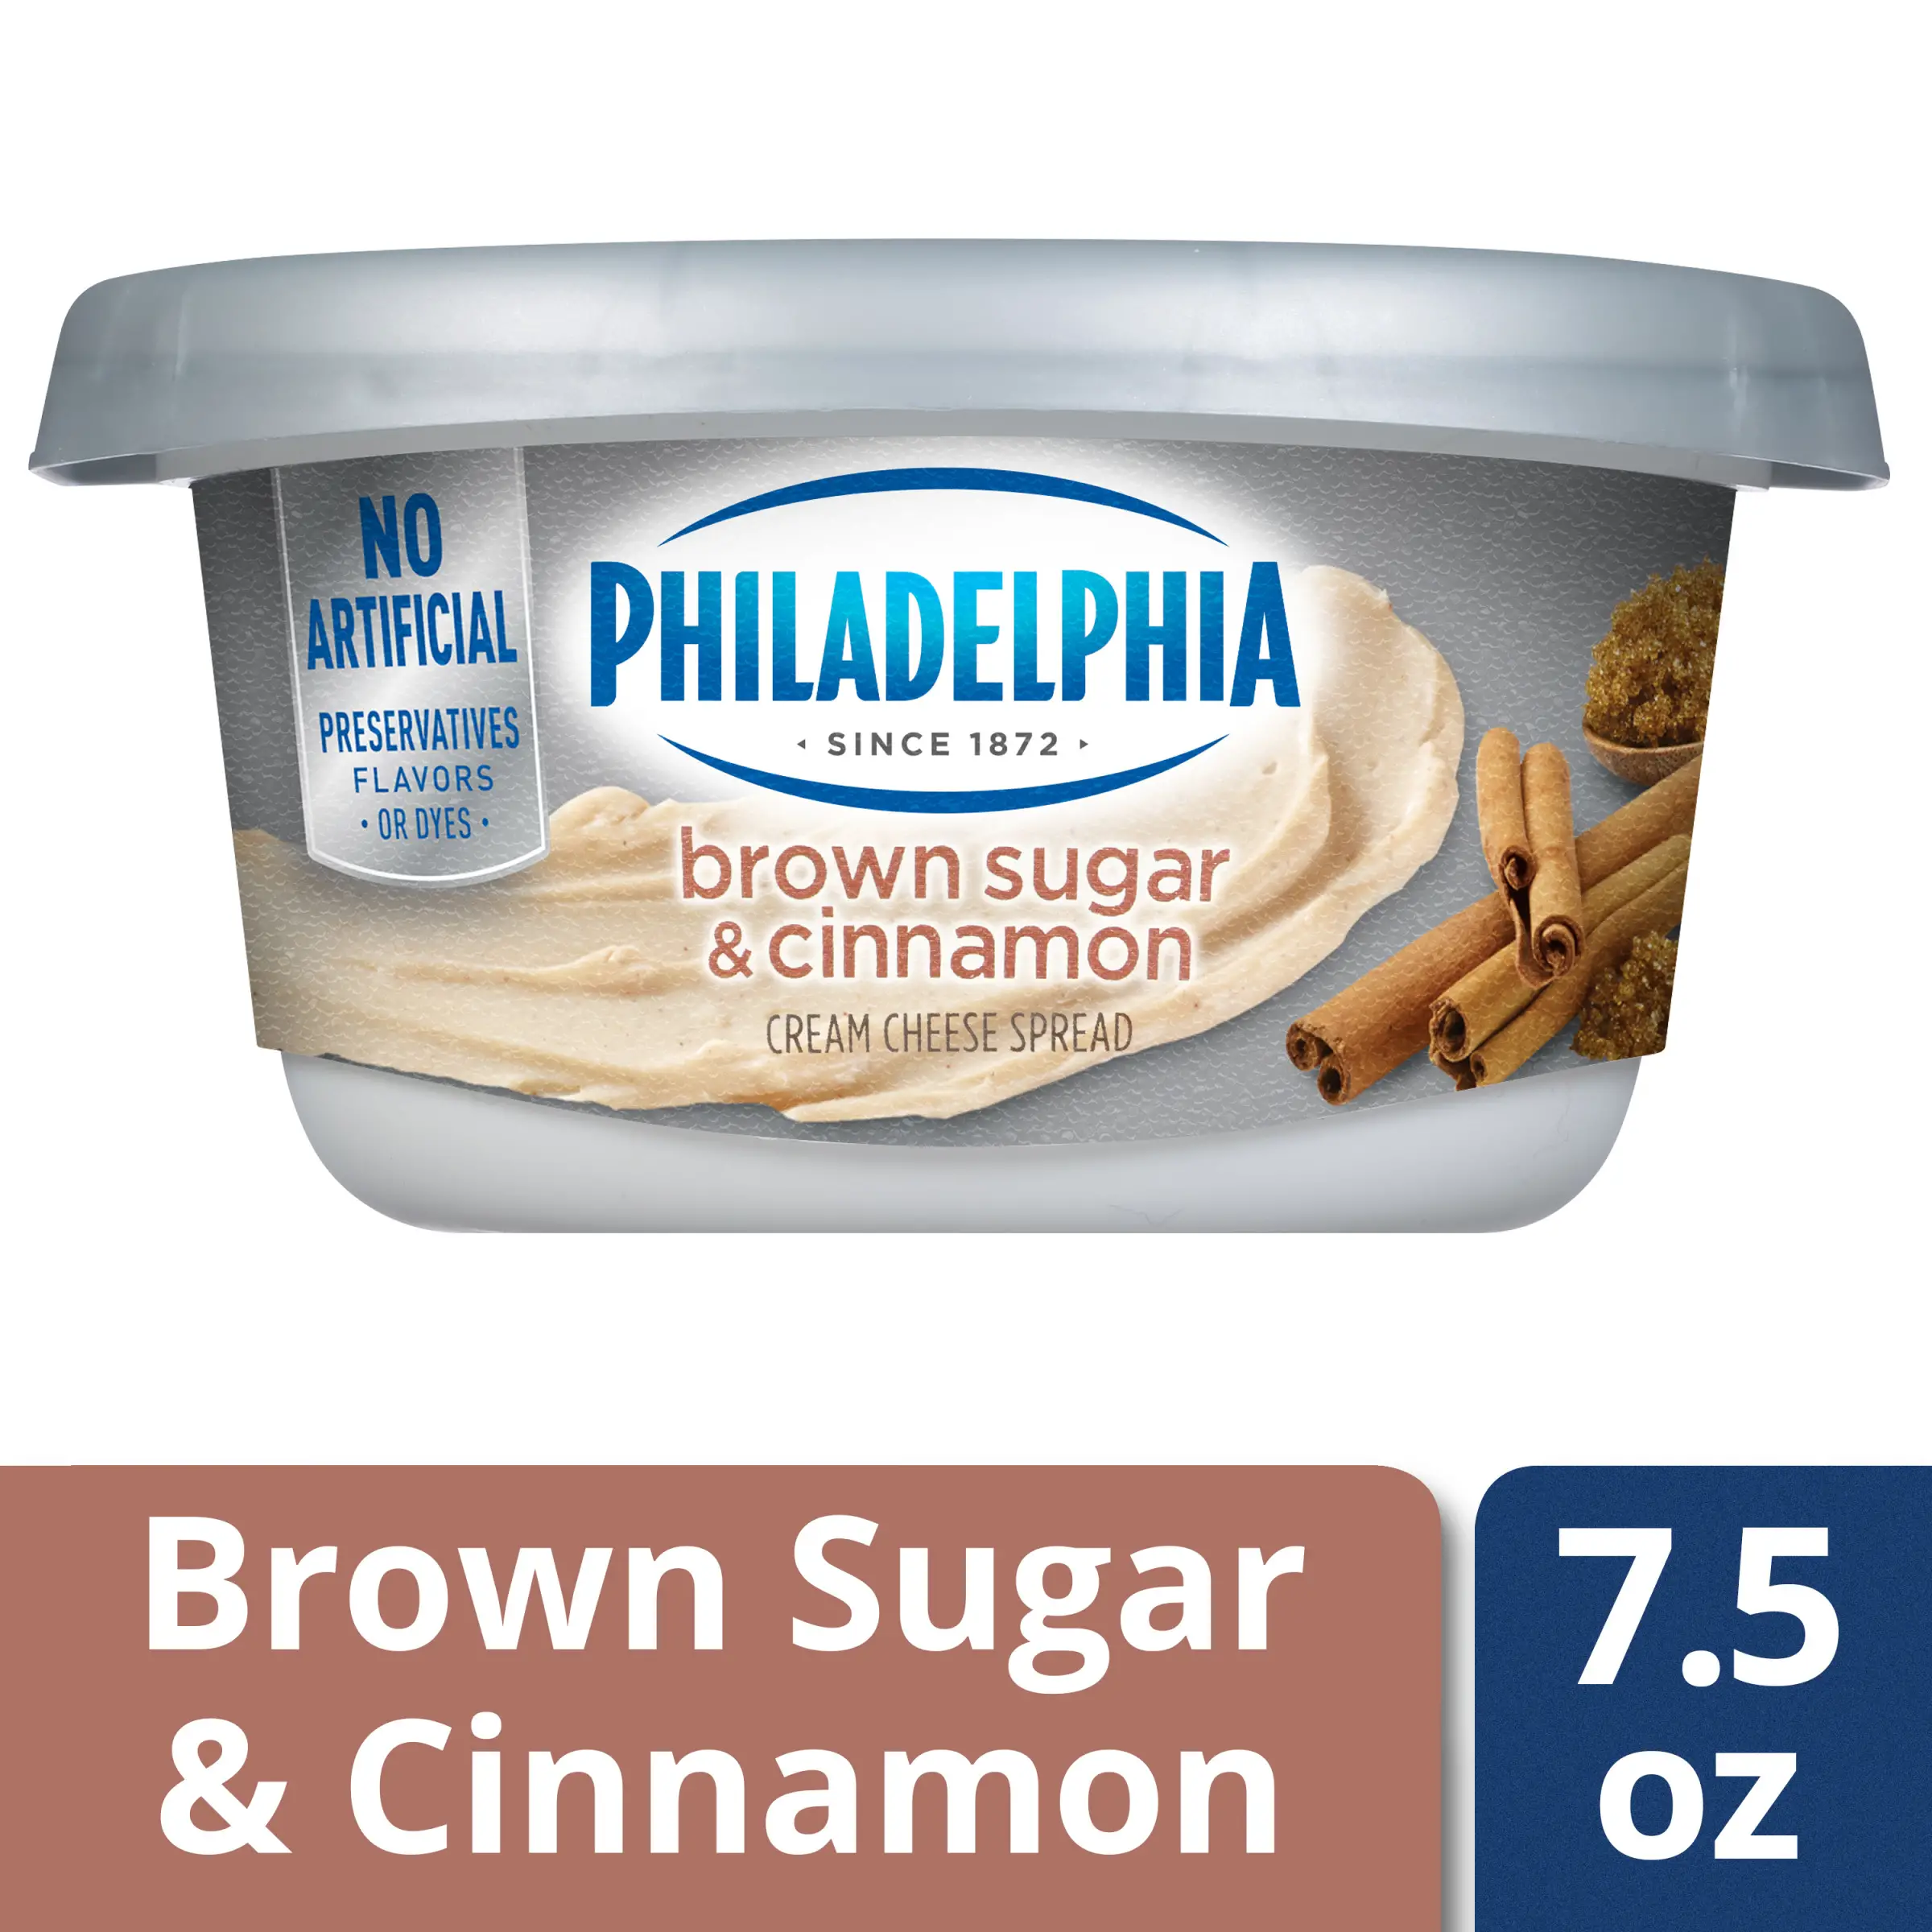 Philadelphia Brown Sugar Cream Cheese Spread, 7.5 oz Tub